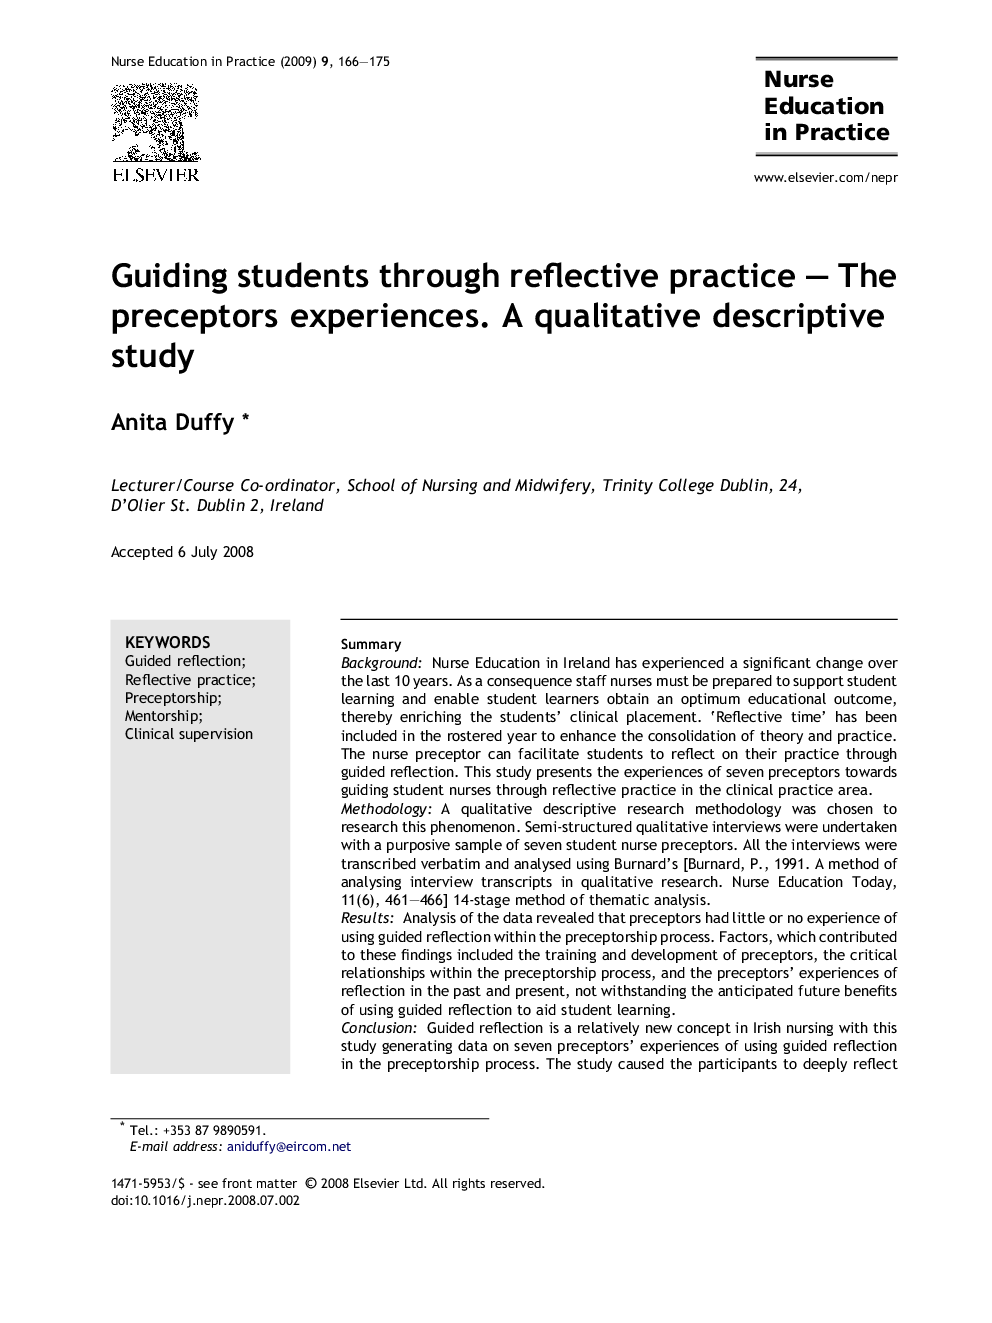 Guiding students through reflective practice – The preceptors experiences. A qualitative descriptive study